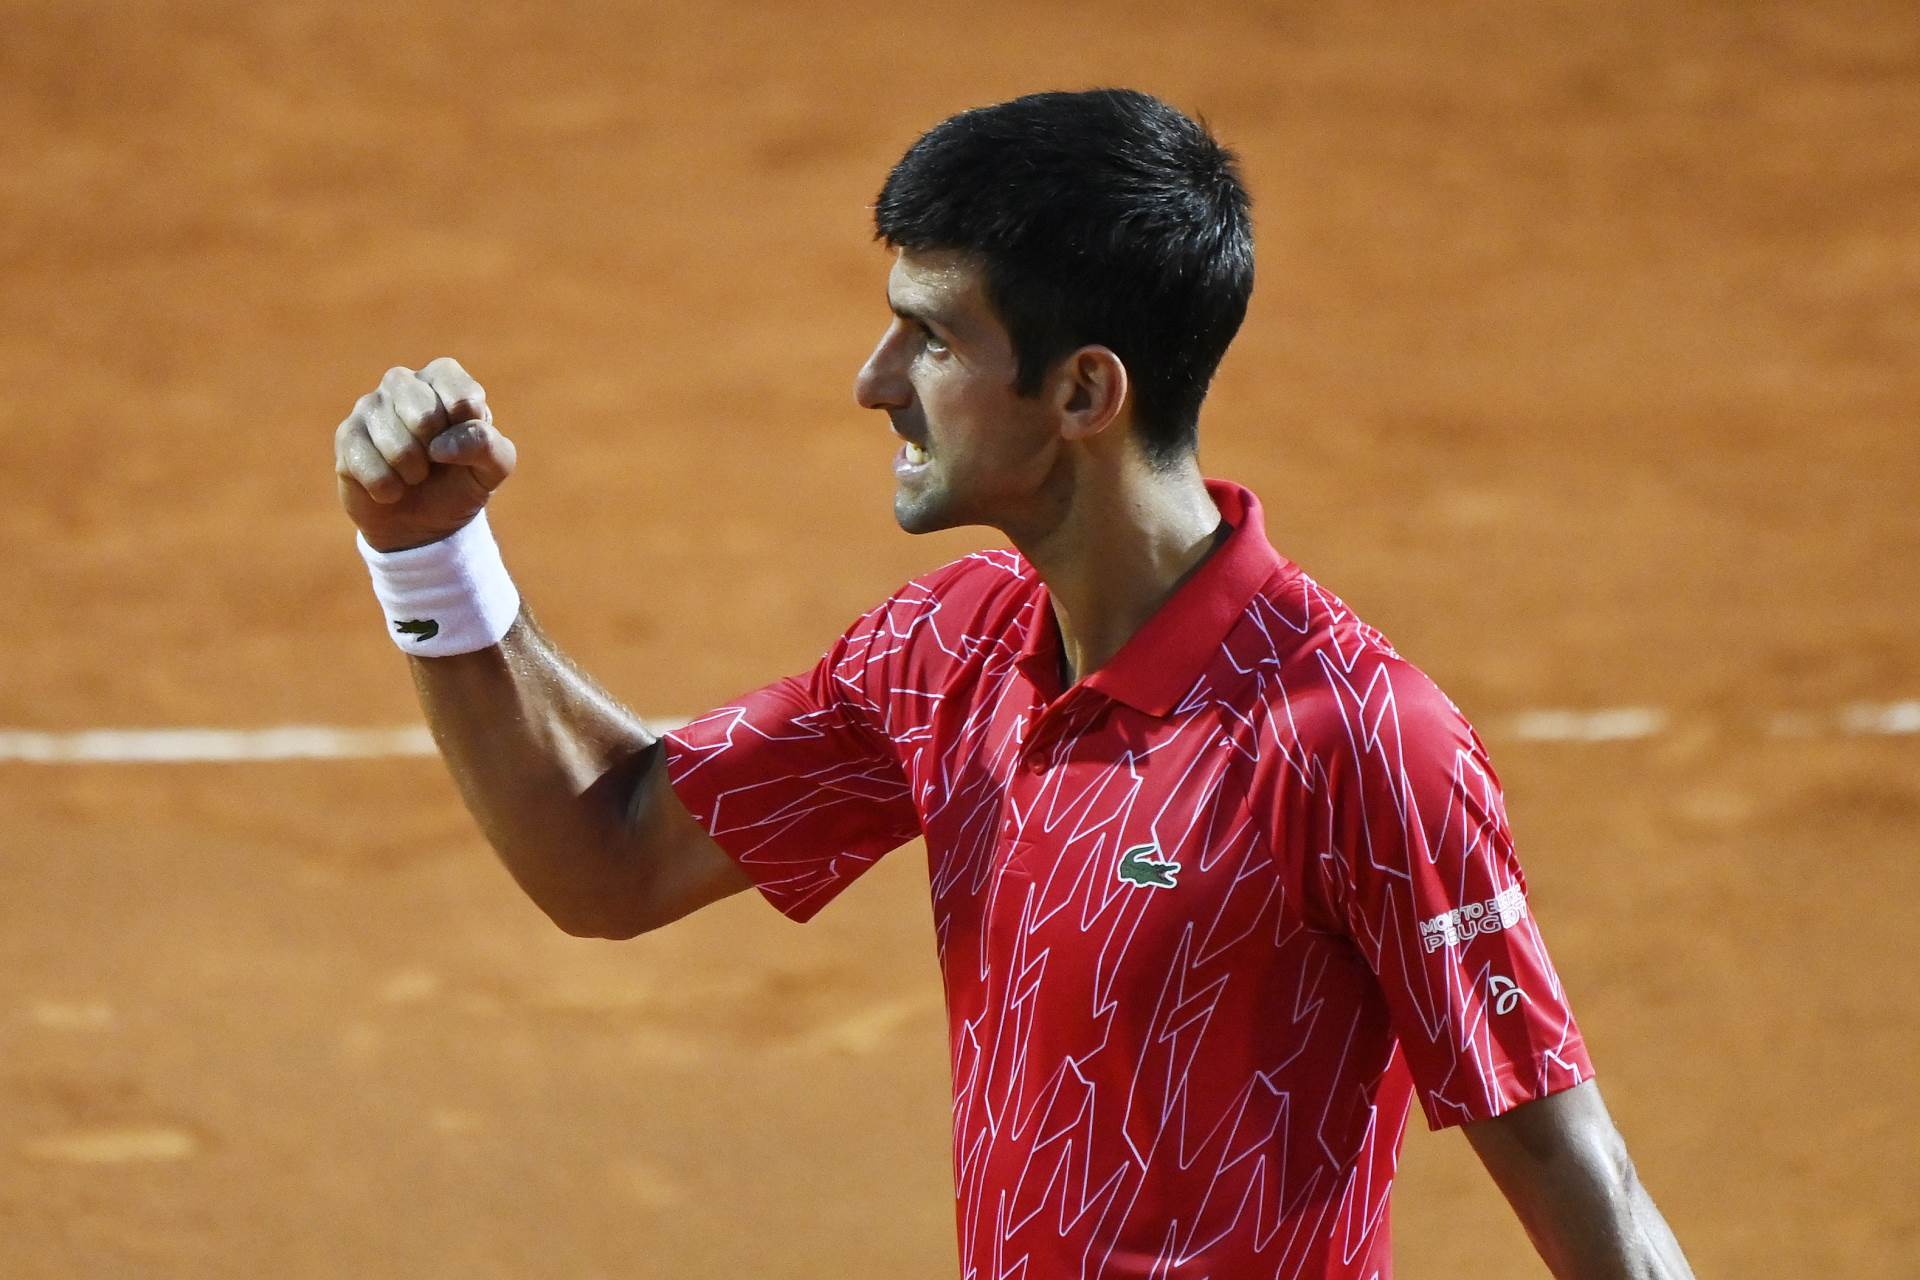  Novak-Djokovic-nepobediv-313-dana-34-pobede-da-savlada-sebe-Rim-masters-US-open-diskvalifikacija 